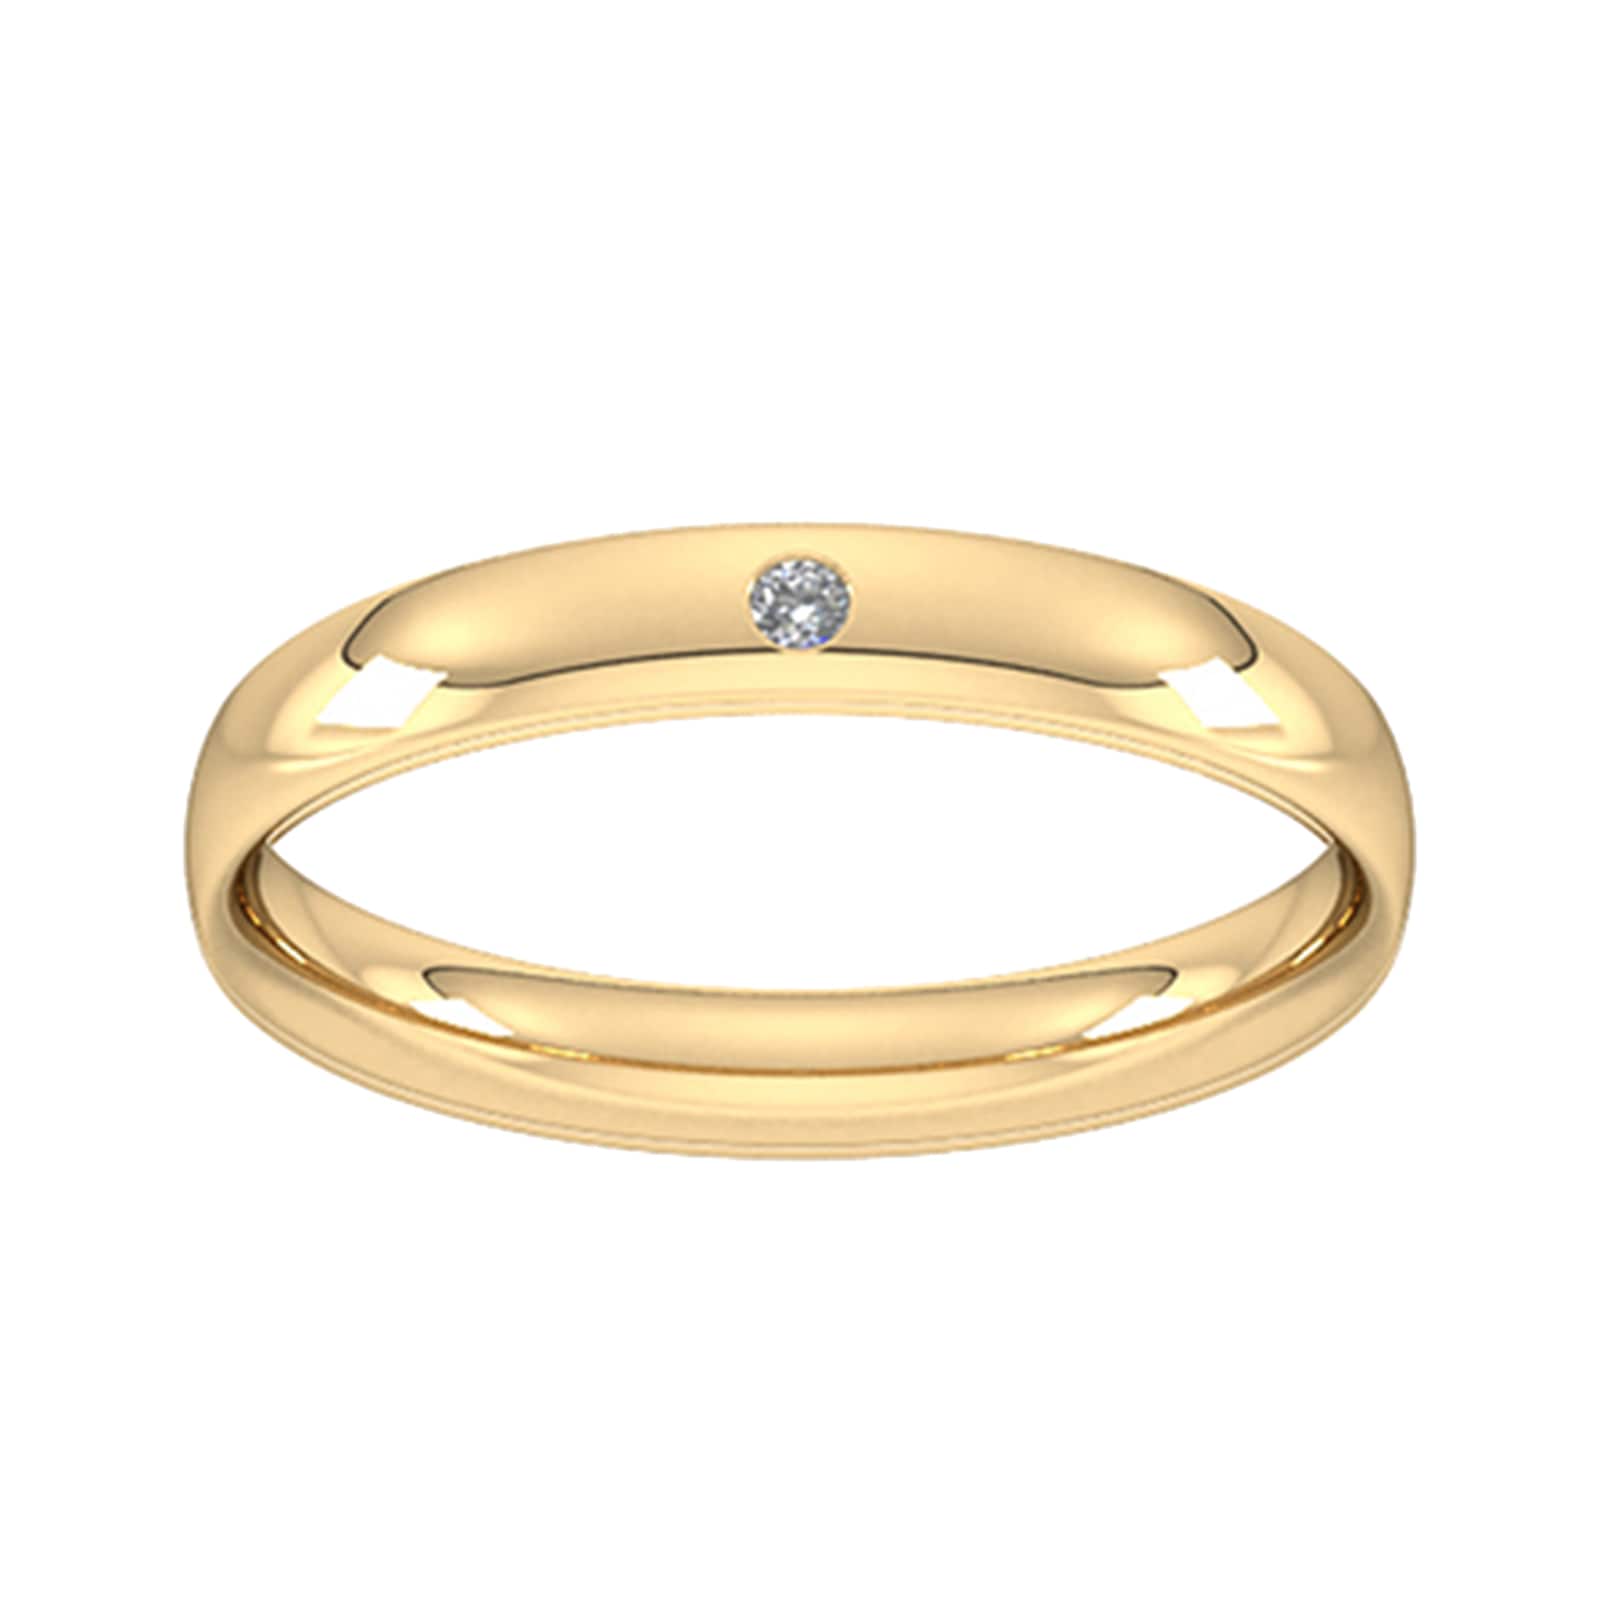 3mm Brilliant Cut Rub Over Diamond Set Wedding Ring In 9 Carat Yellow Gold - Ring Size U